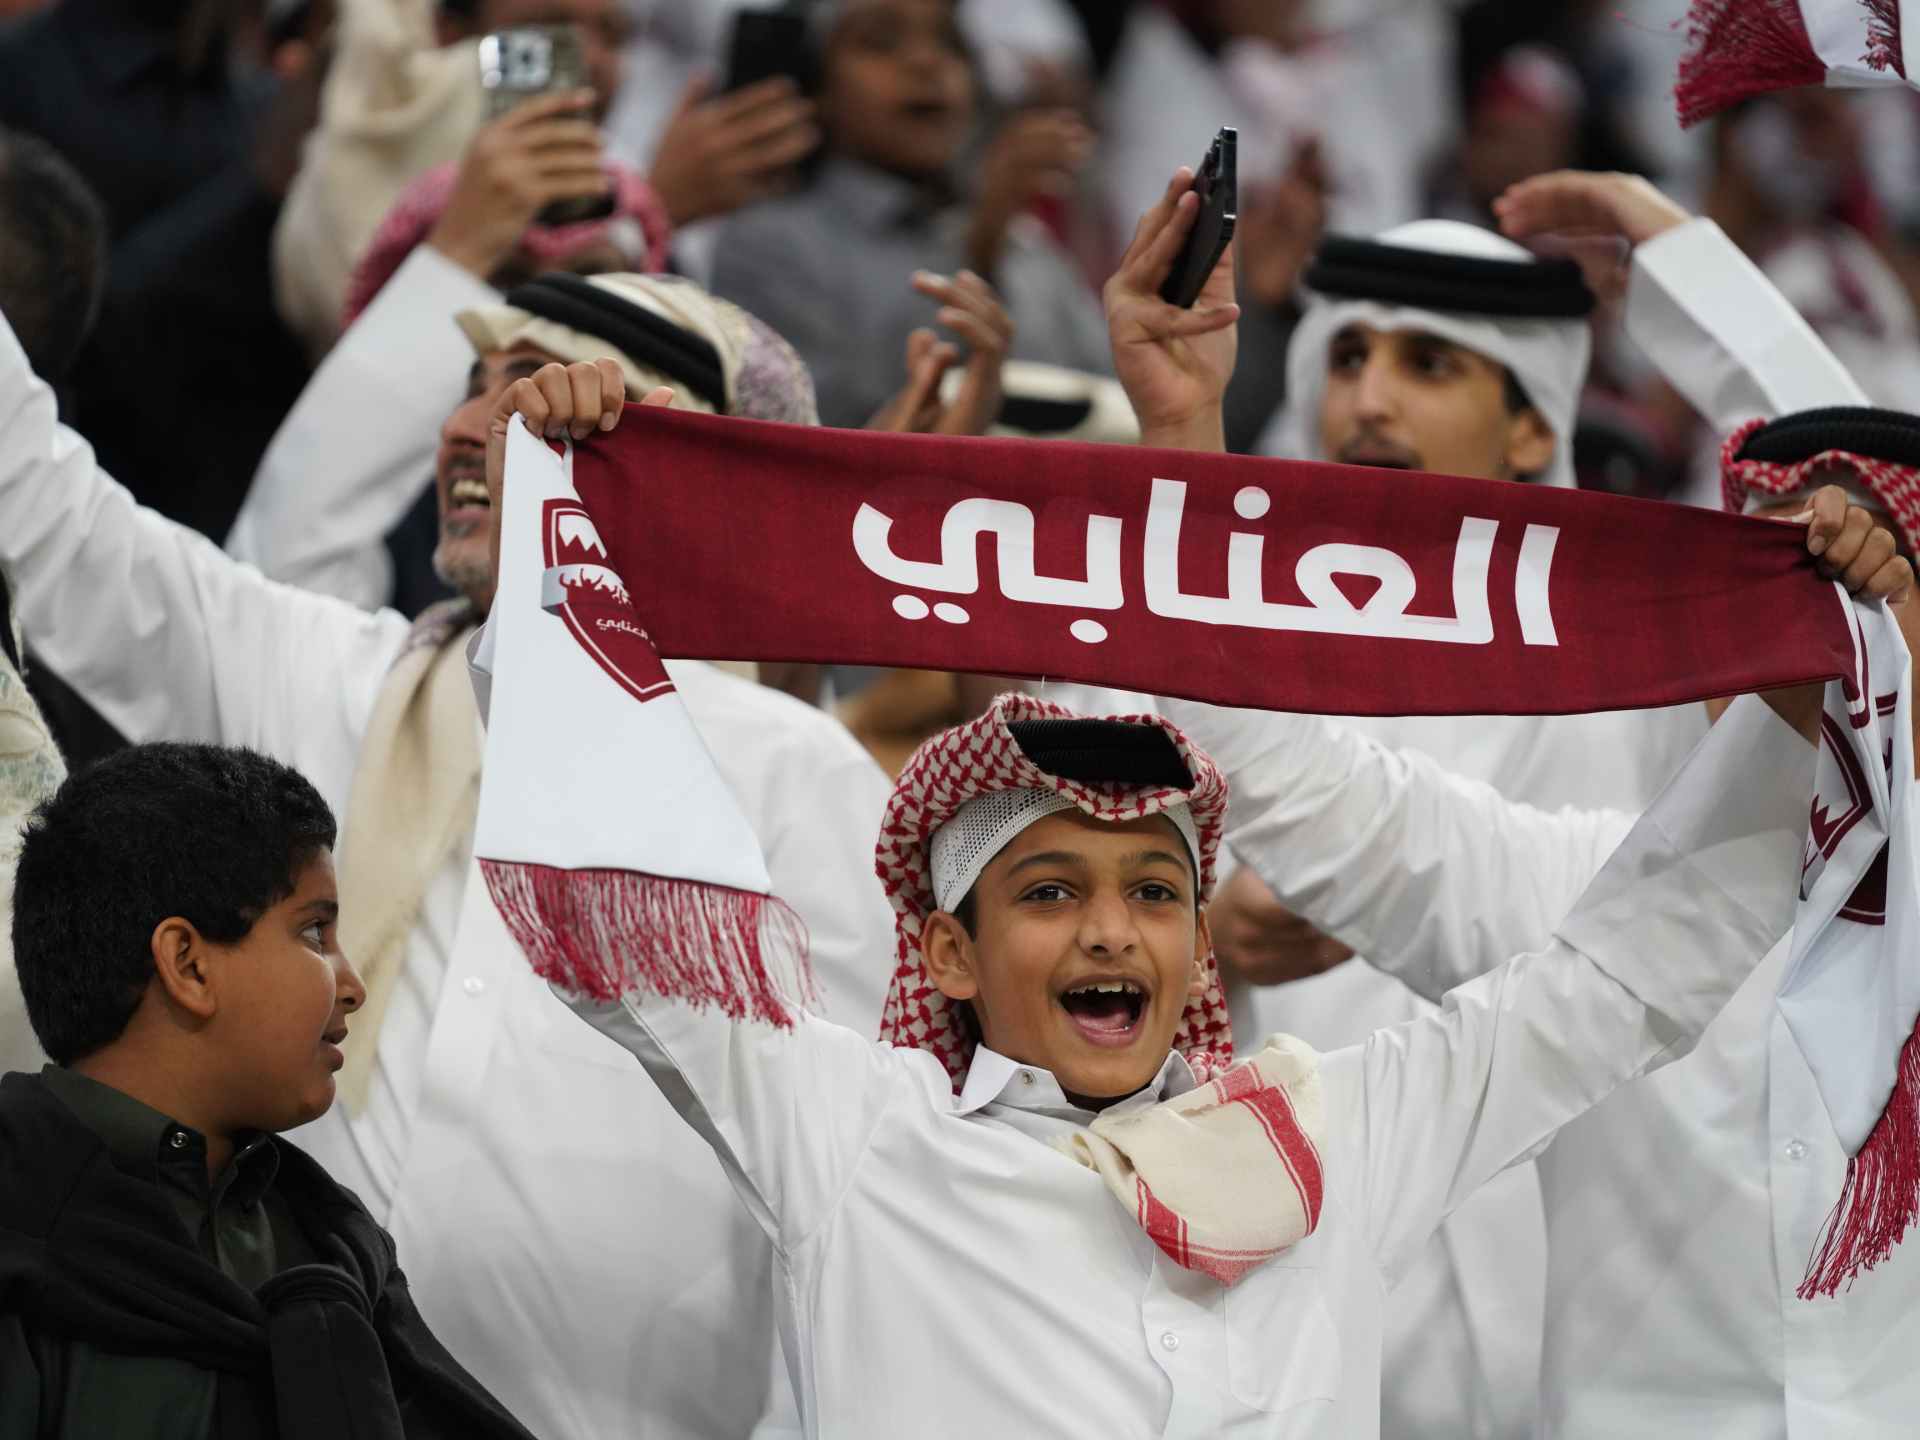 Photos: Qatar wins against Uzbekistan in heated Asian Cup quarterfinal